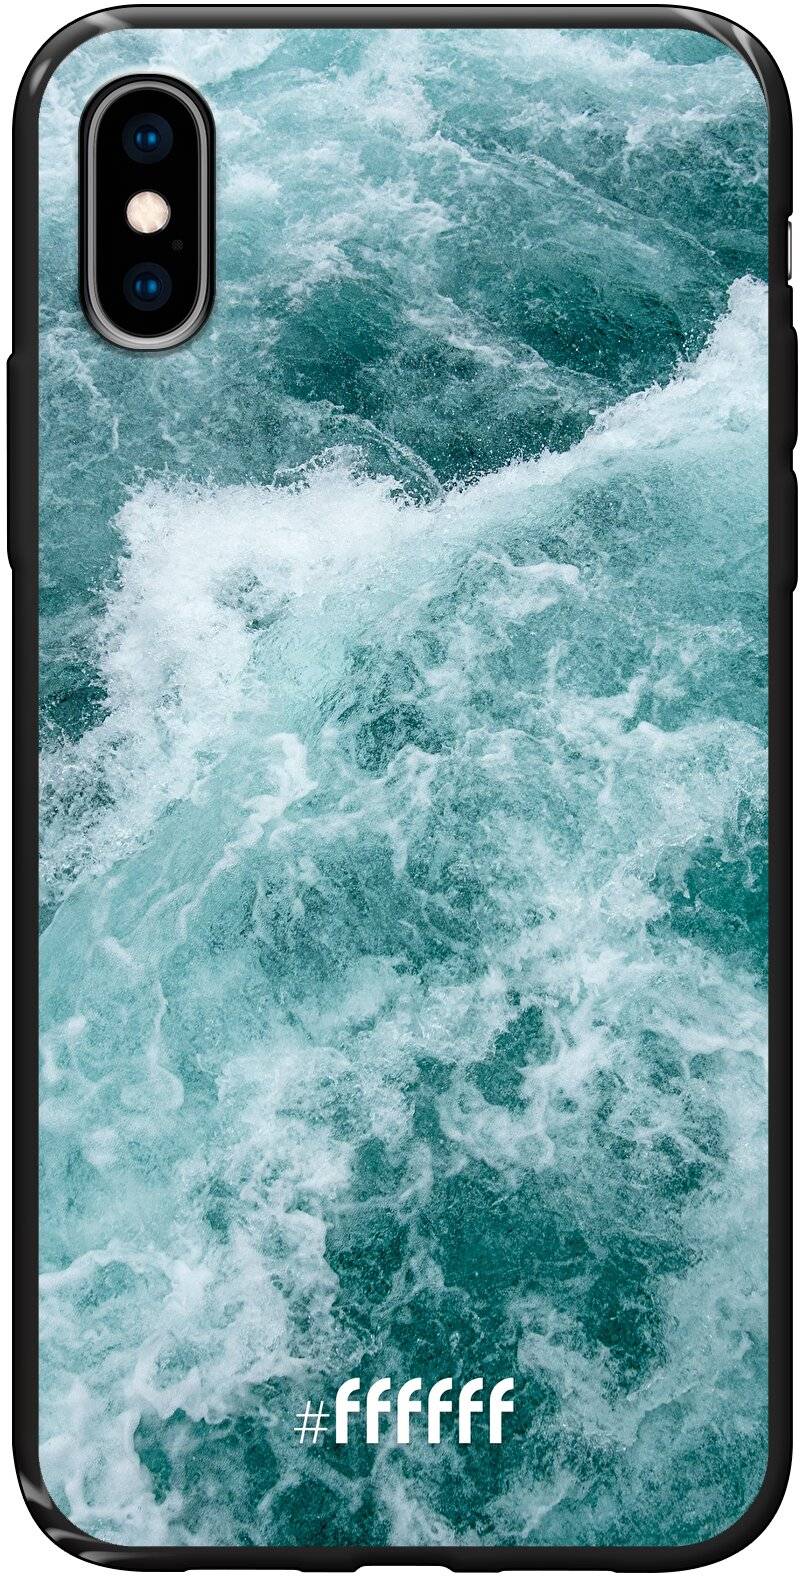 Whitecap Waves iPhone Xs